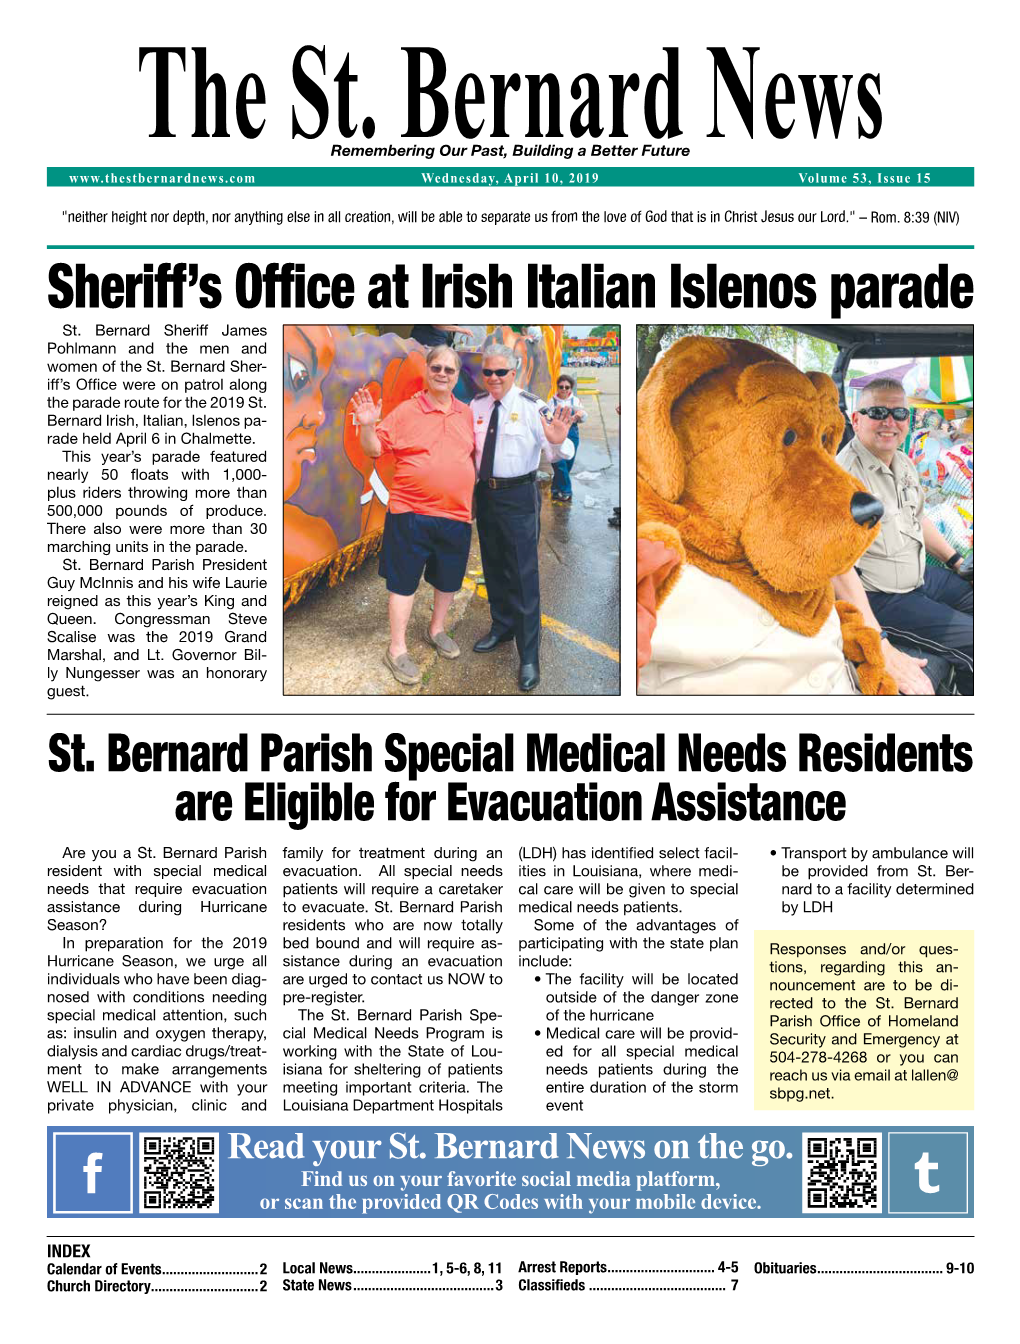 Sheriff's Office at Irish Italian Islenos Parade